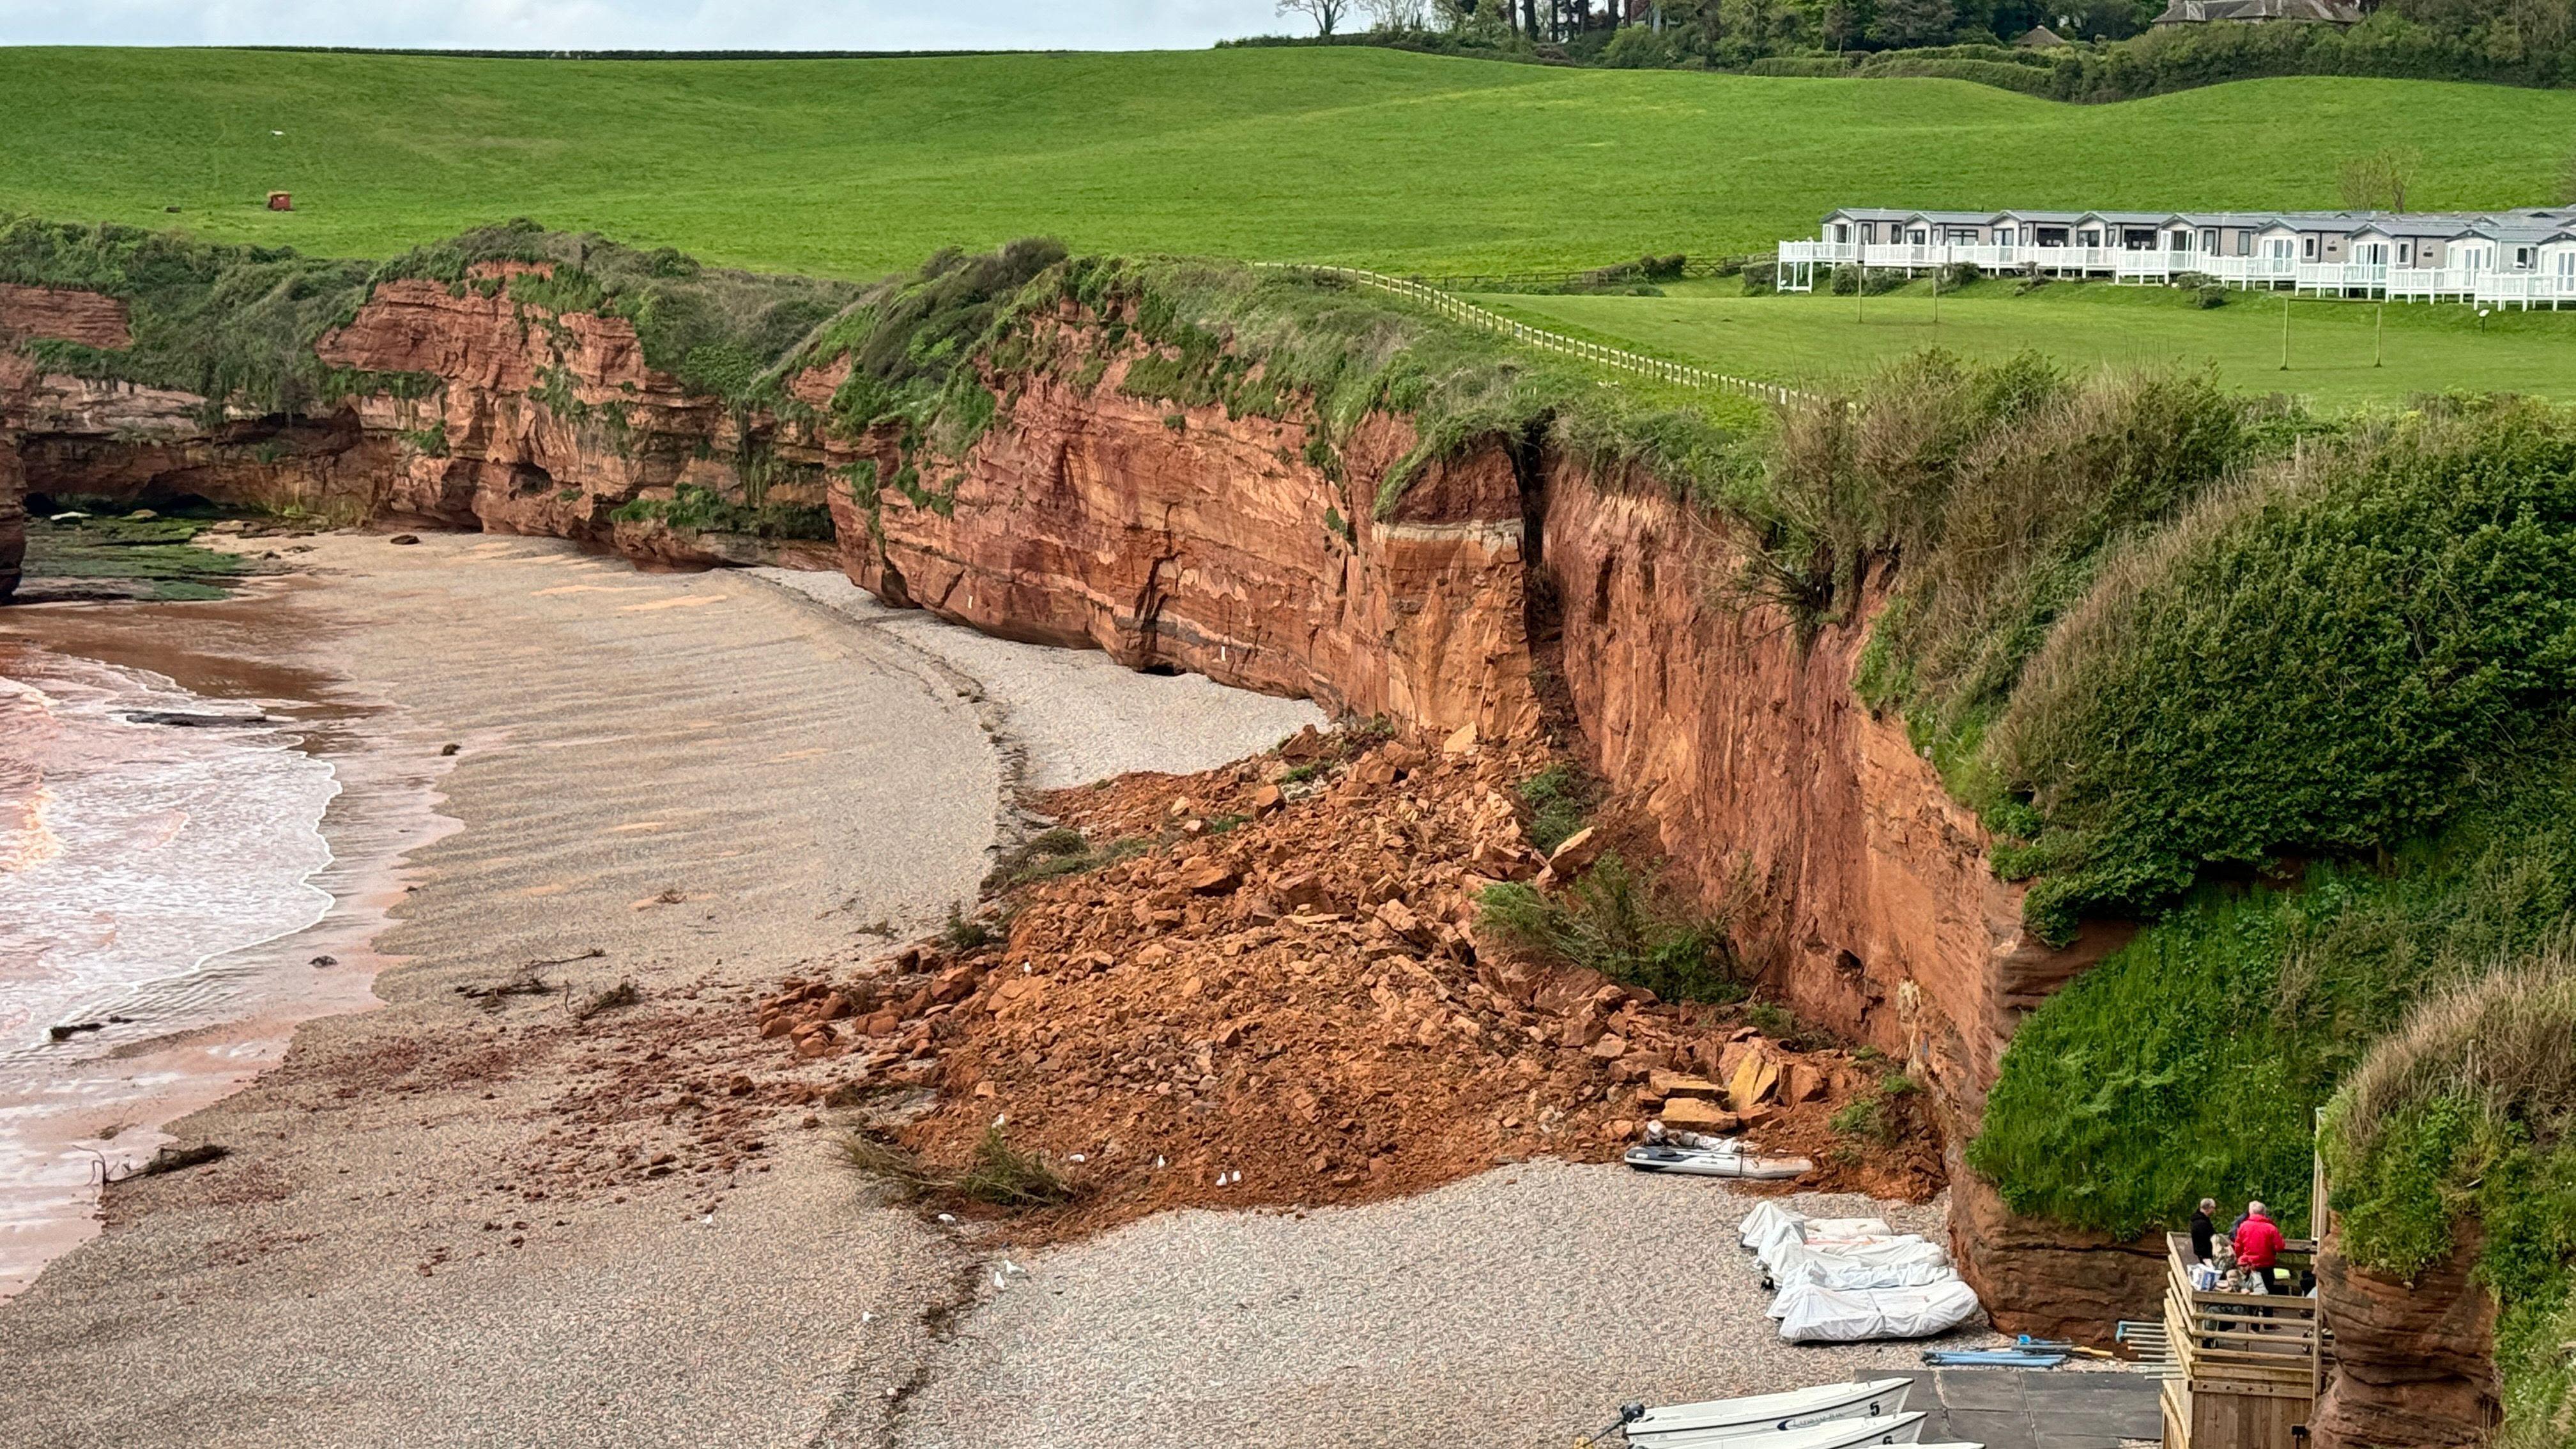 Cliff fall made 'ground shake' at beach in Devon